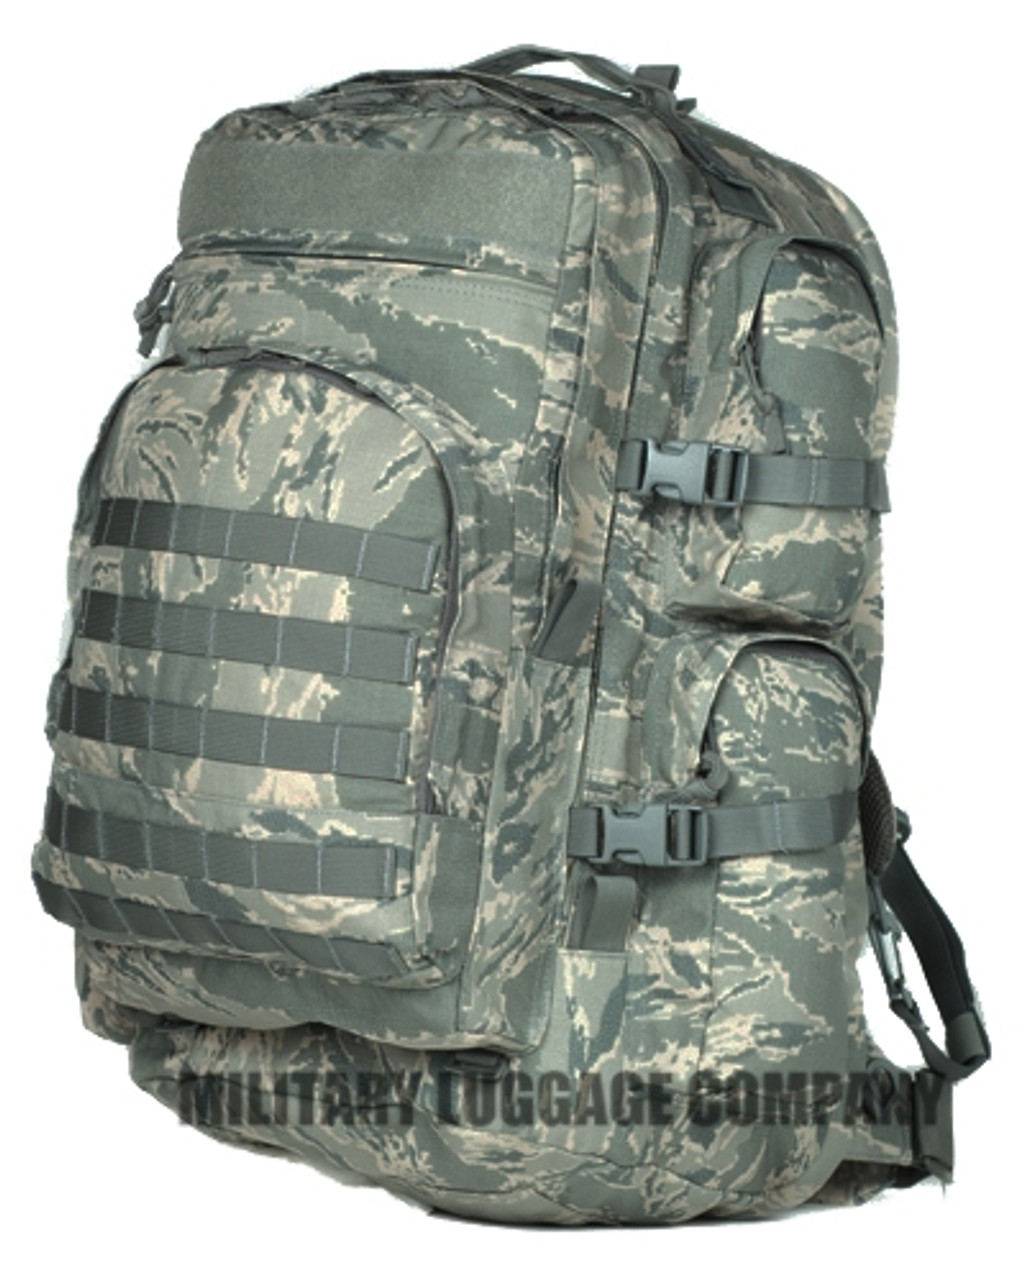 ABU Long Range SOC Bugout Bag | Military Luggage